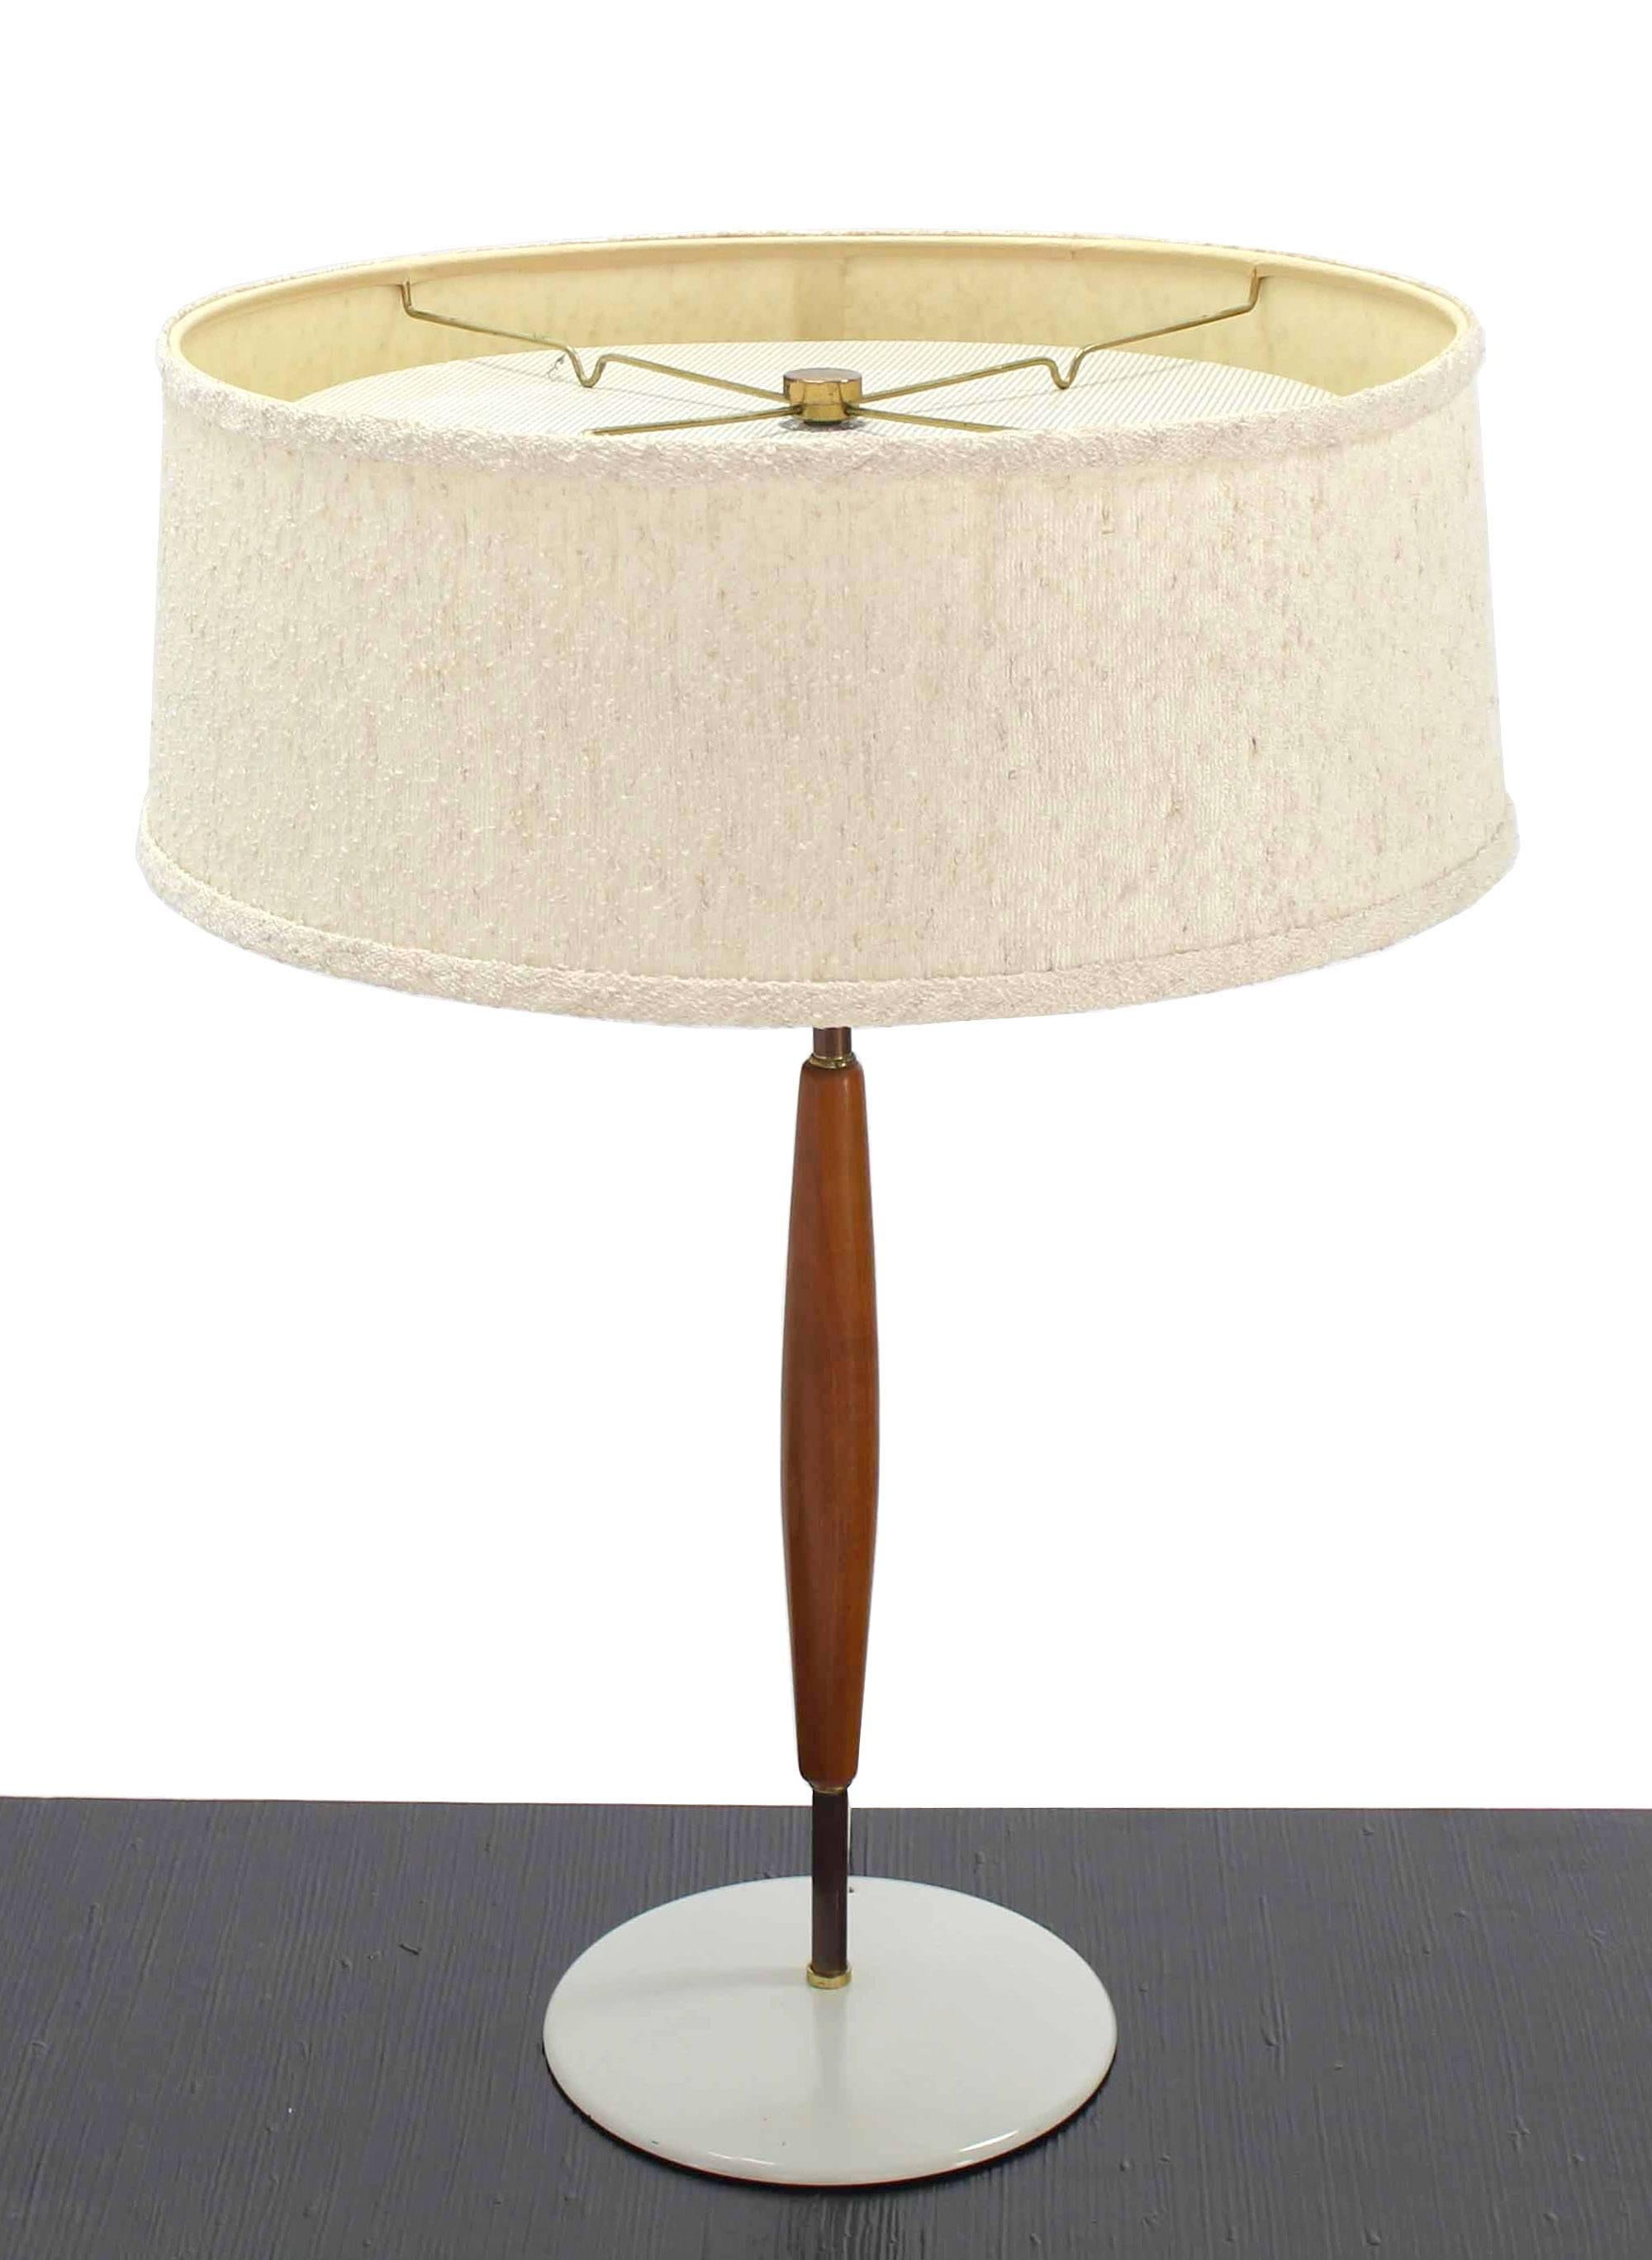 American Mid-Century Modern Walnut and Metal Table Lamp